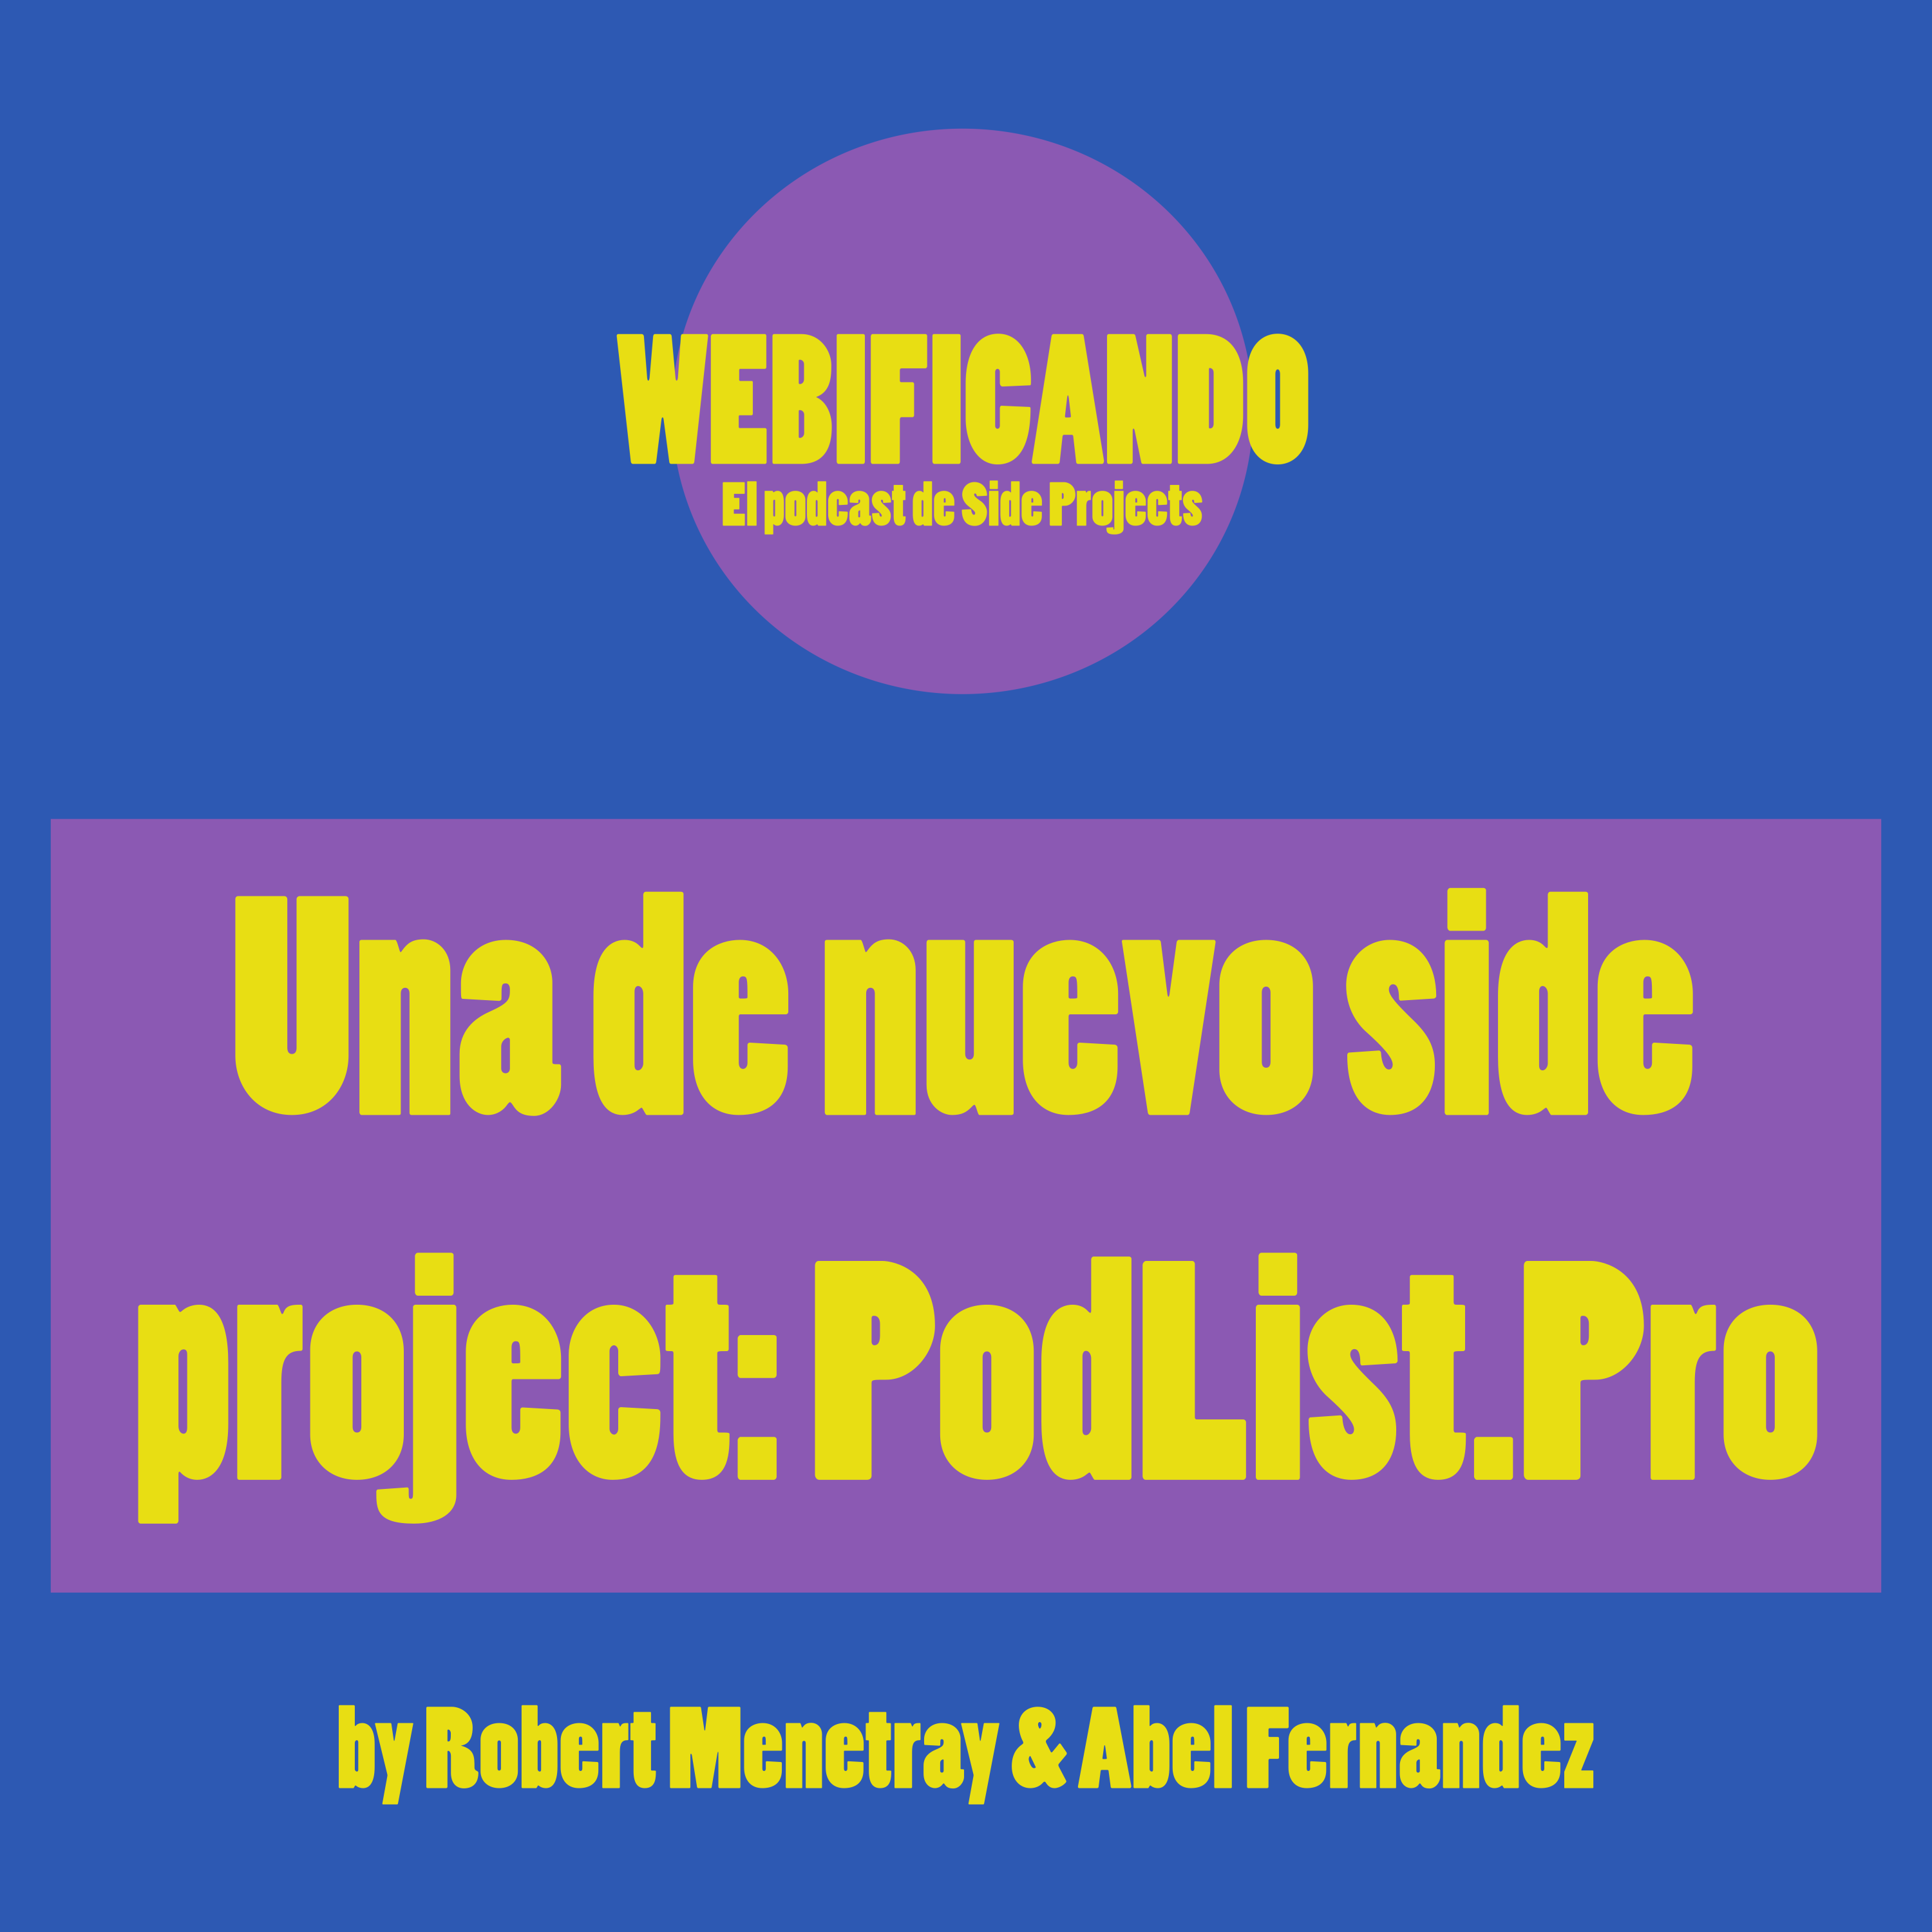 Una de nuevo side project: PodList.Pro